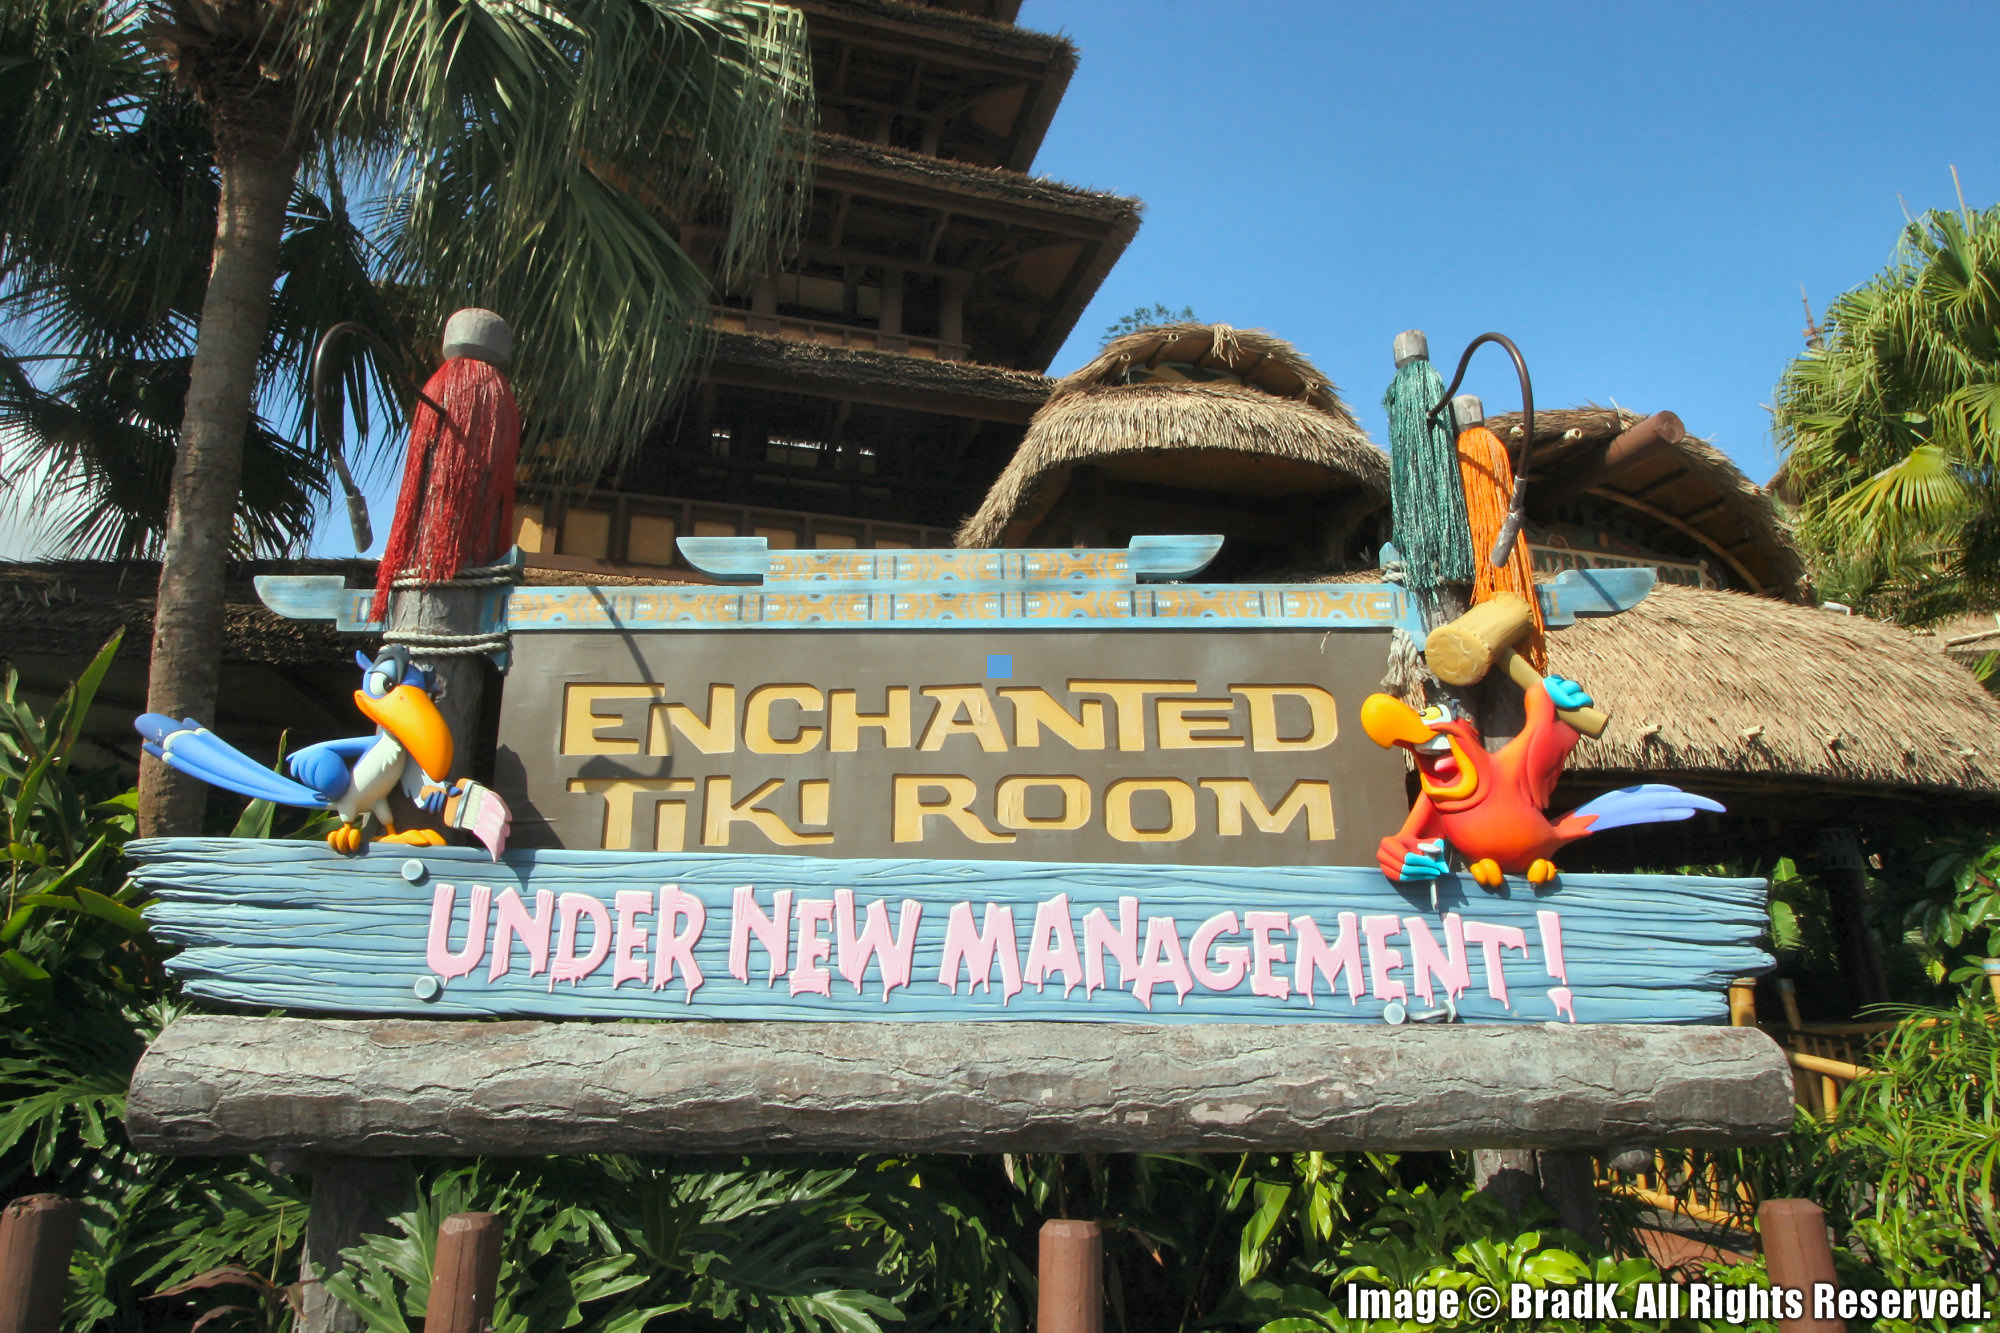 Magic Kingdom - Enchanted Tiki Room - Under New Management Sign